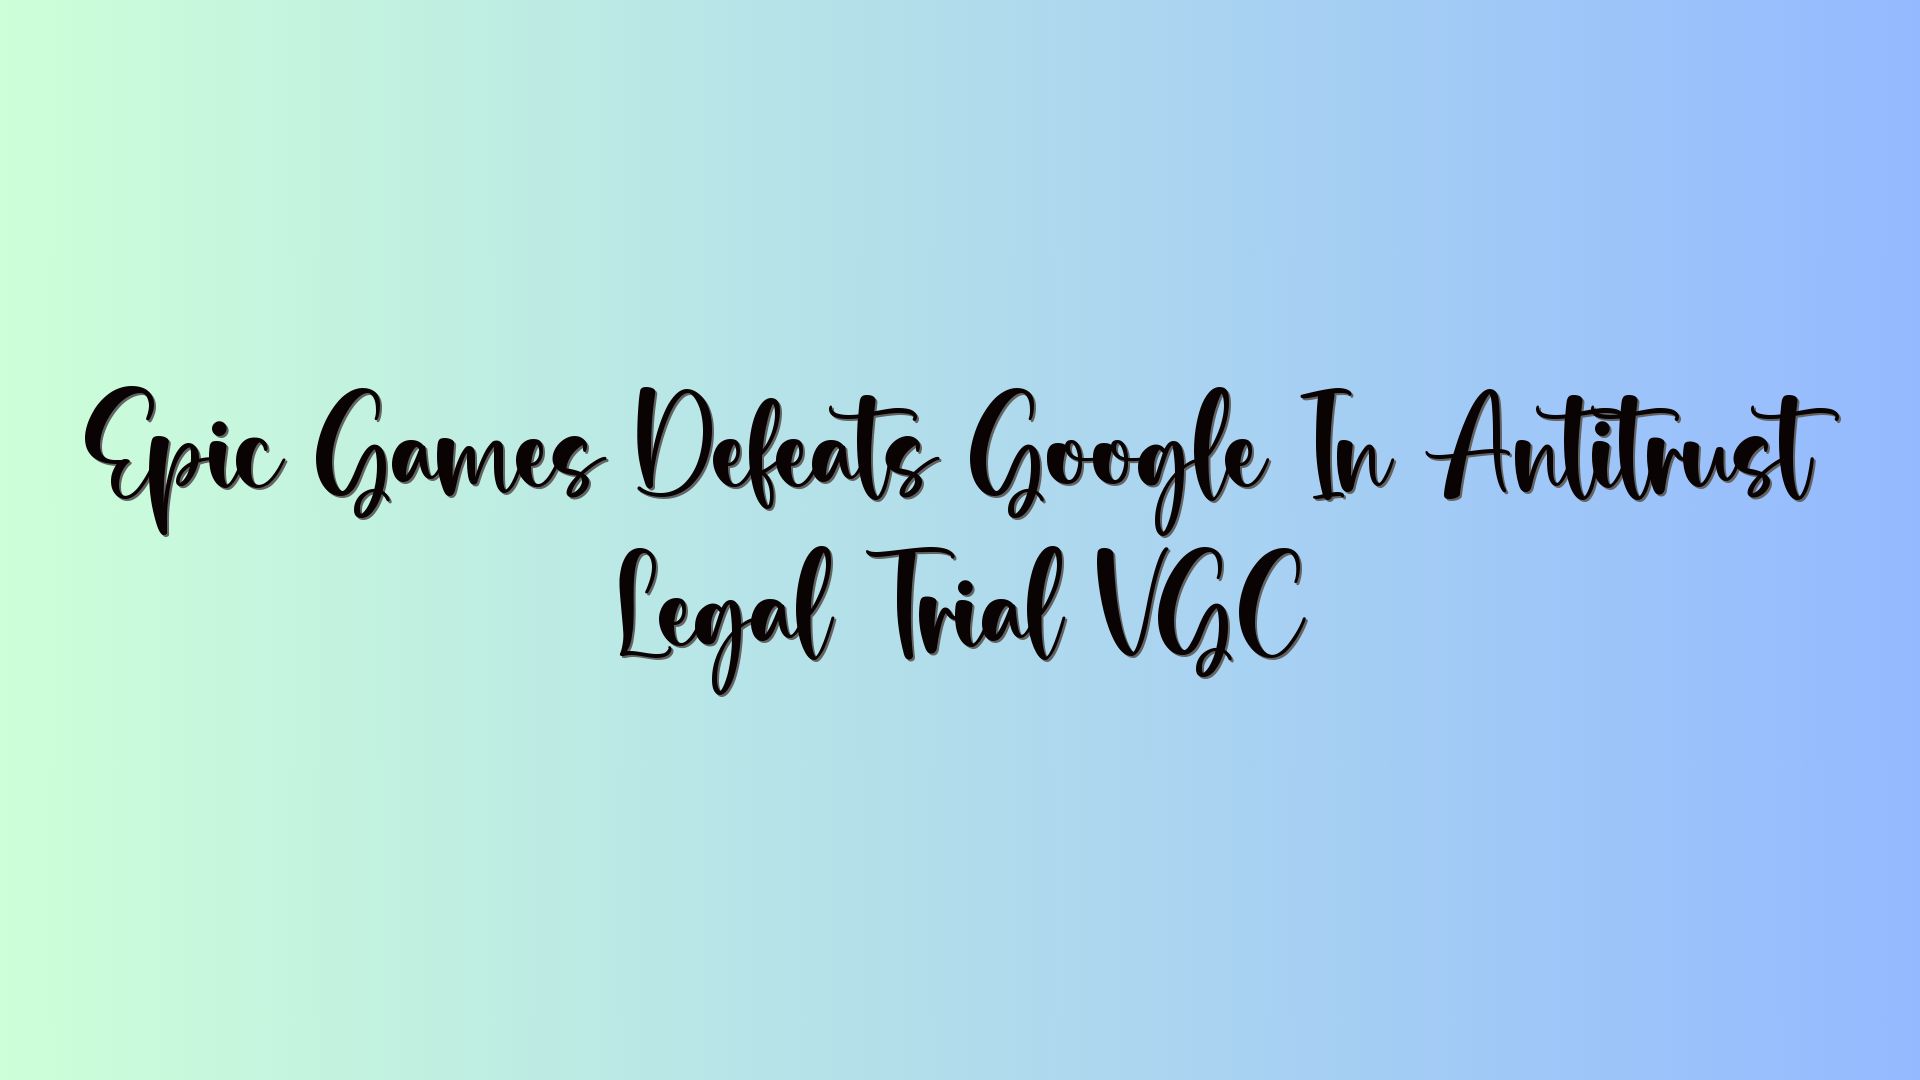 Epic Games Defeats Google In Antitrust Legal Trial VGC